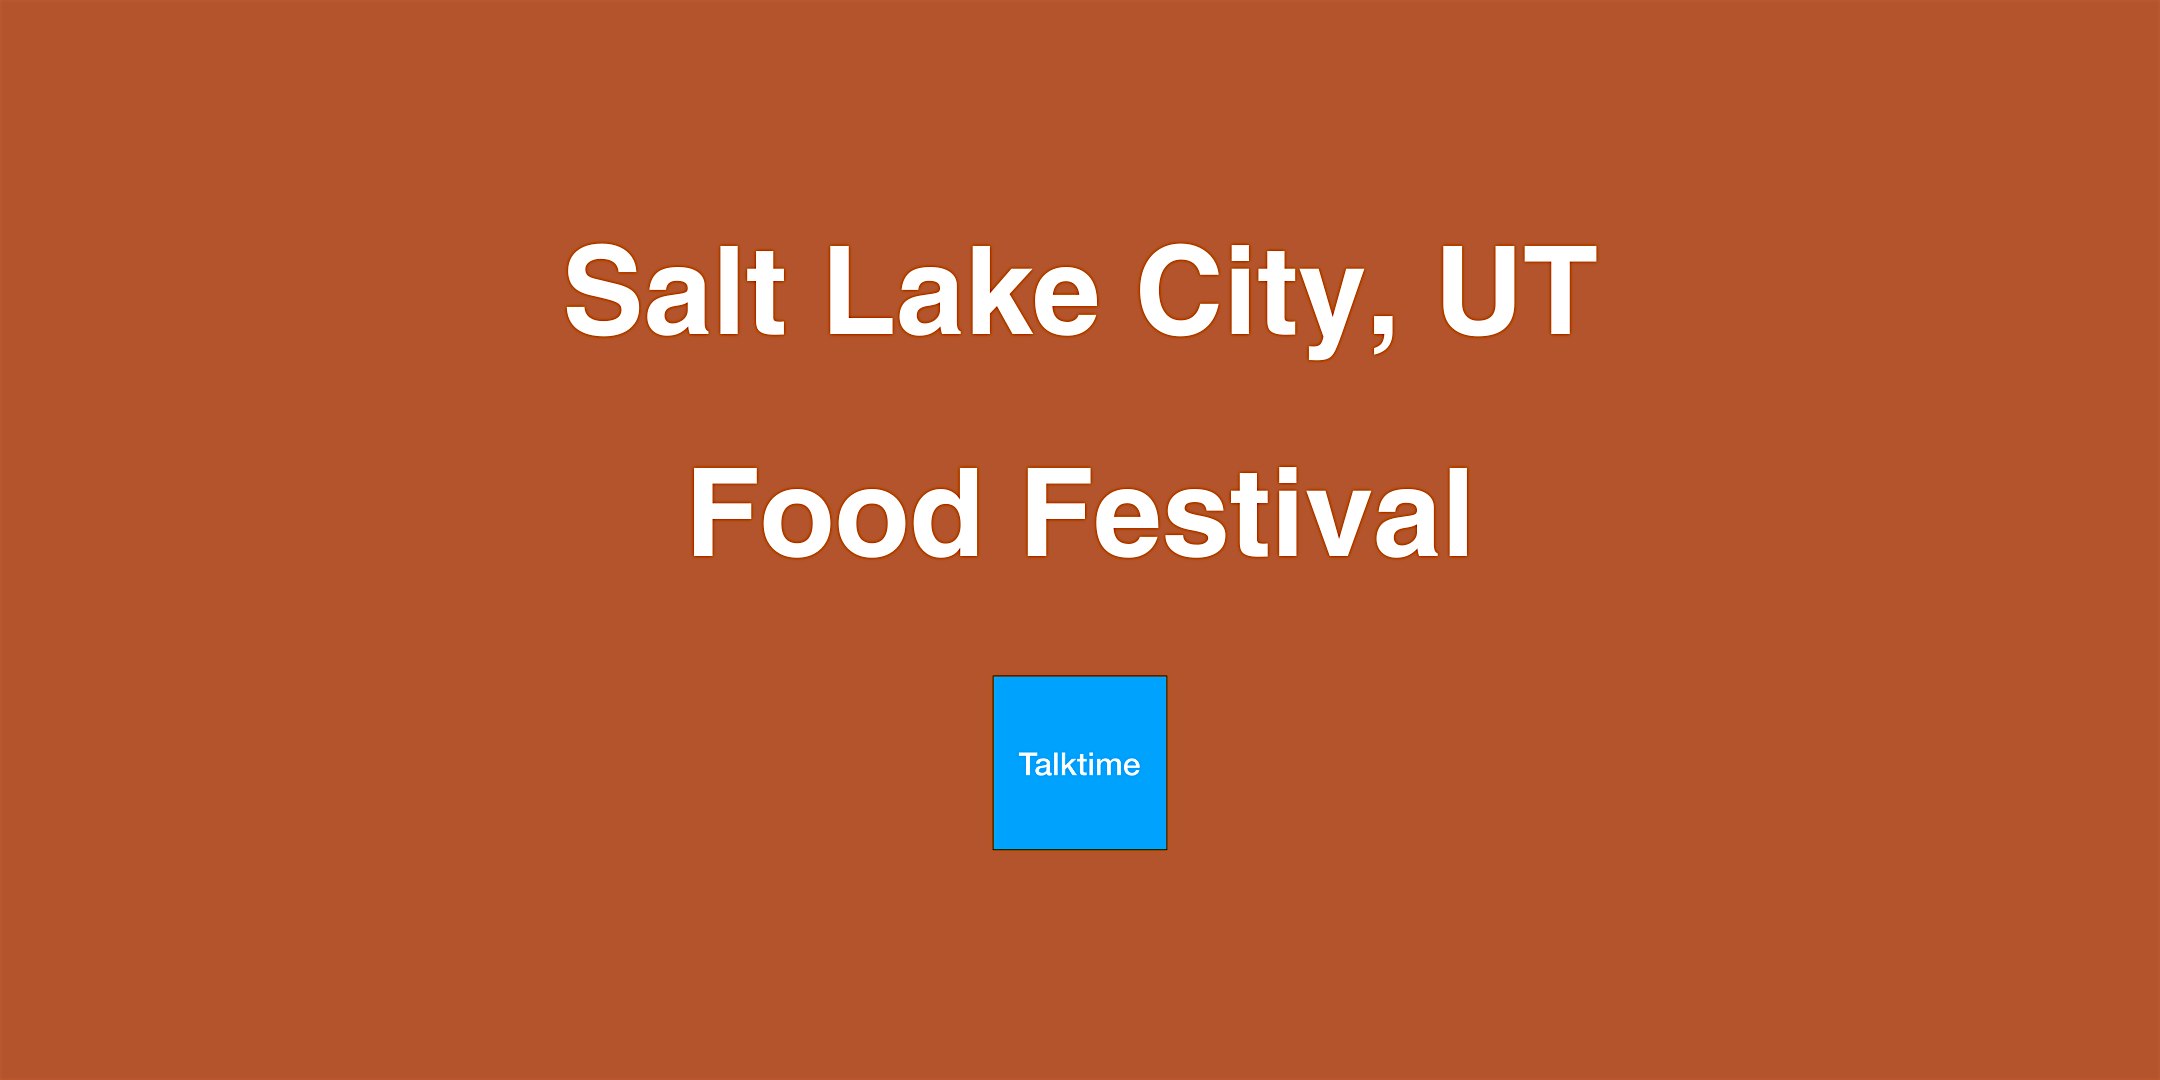 Food Festival - Salt Lake City